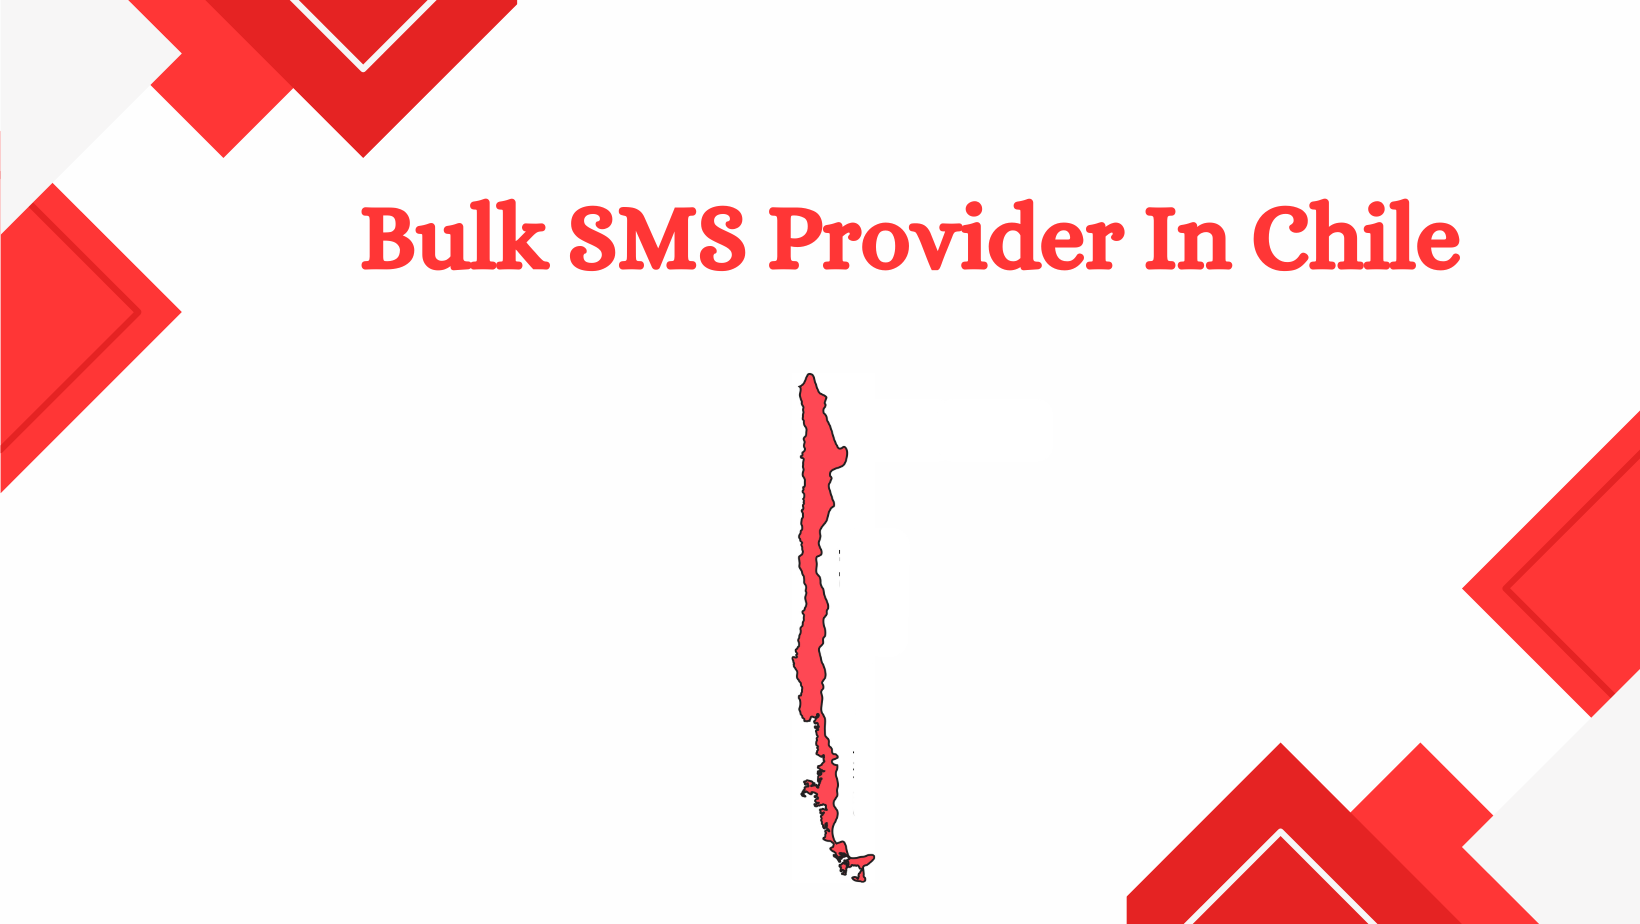 Bulk SMS Provider In Chile